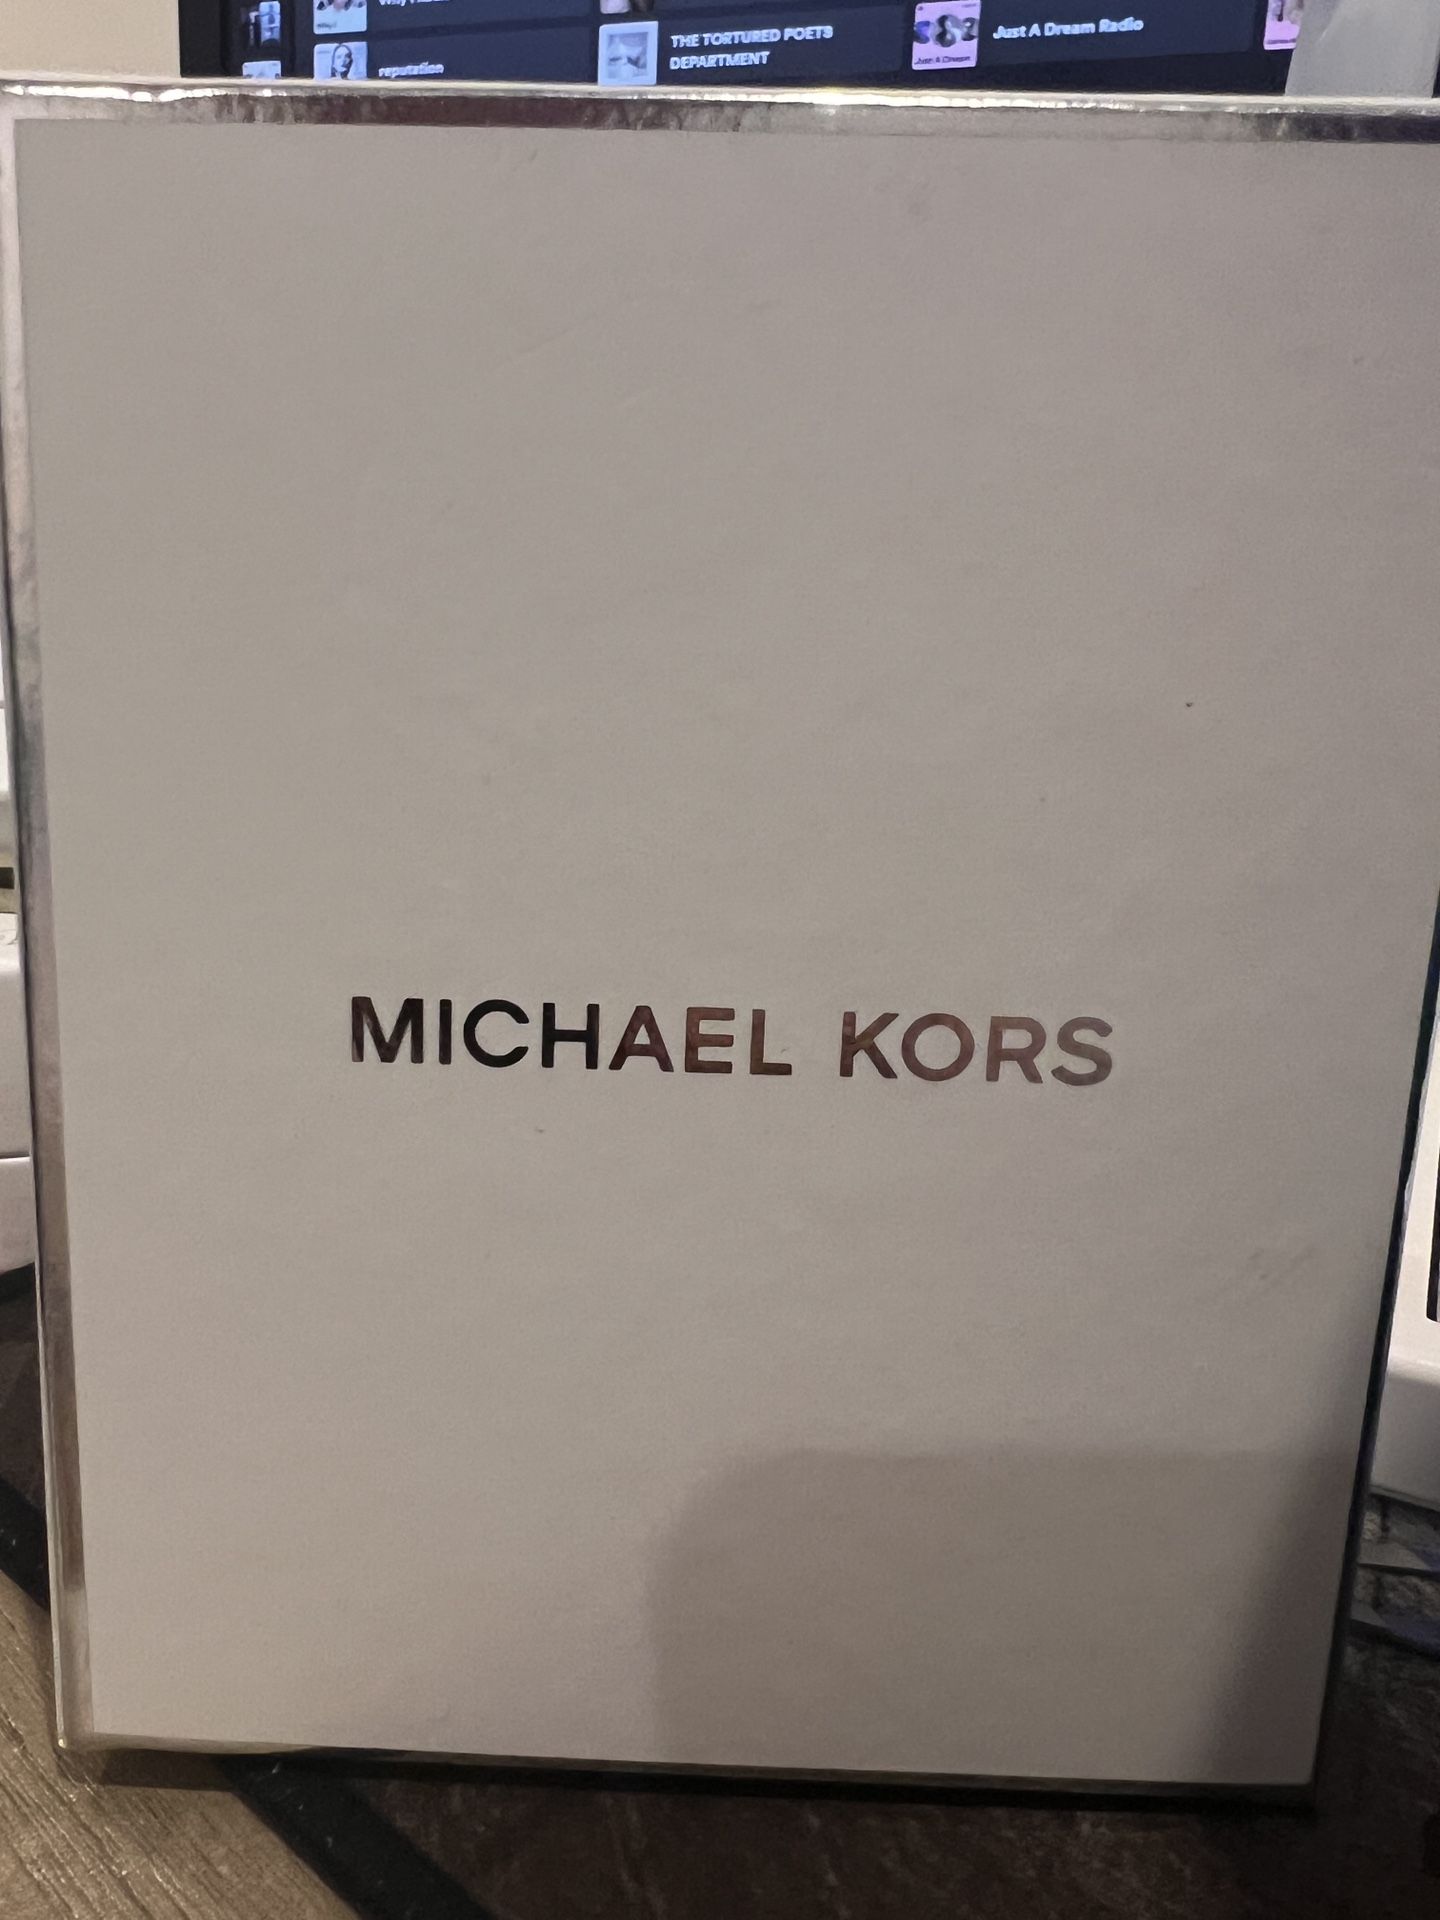 Michael Kors keychain